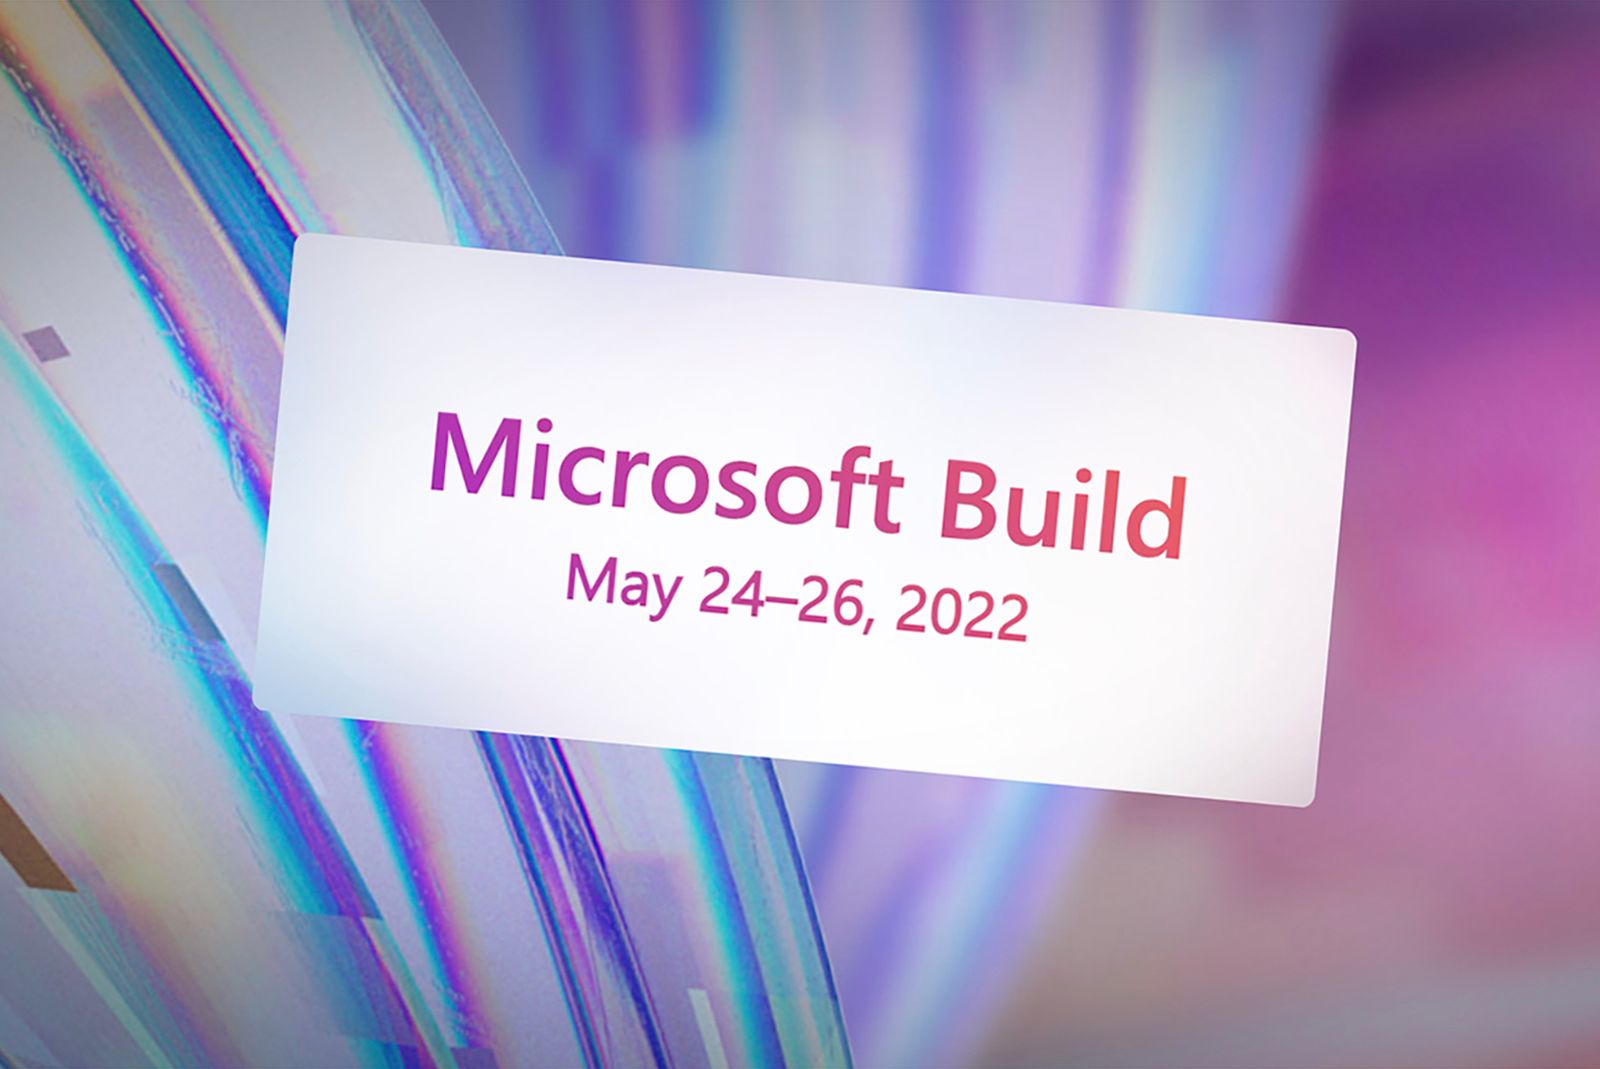 microsoft build 2020 everything microsoft has announced so far photo 7